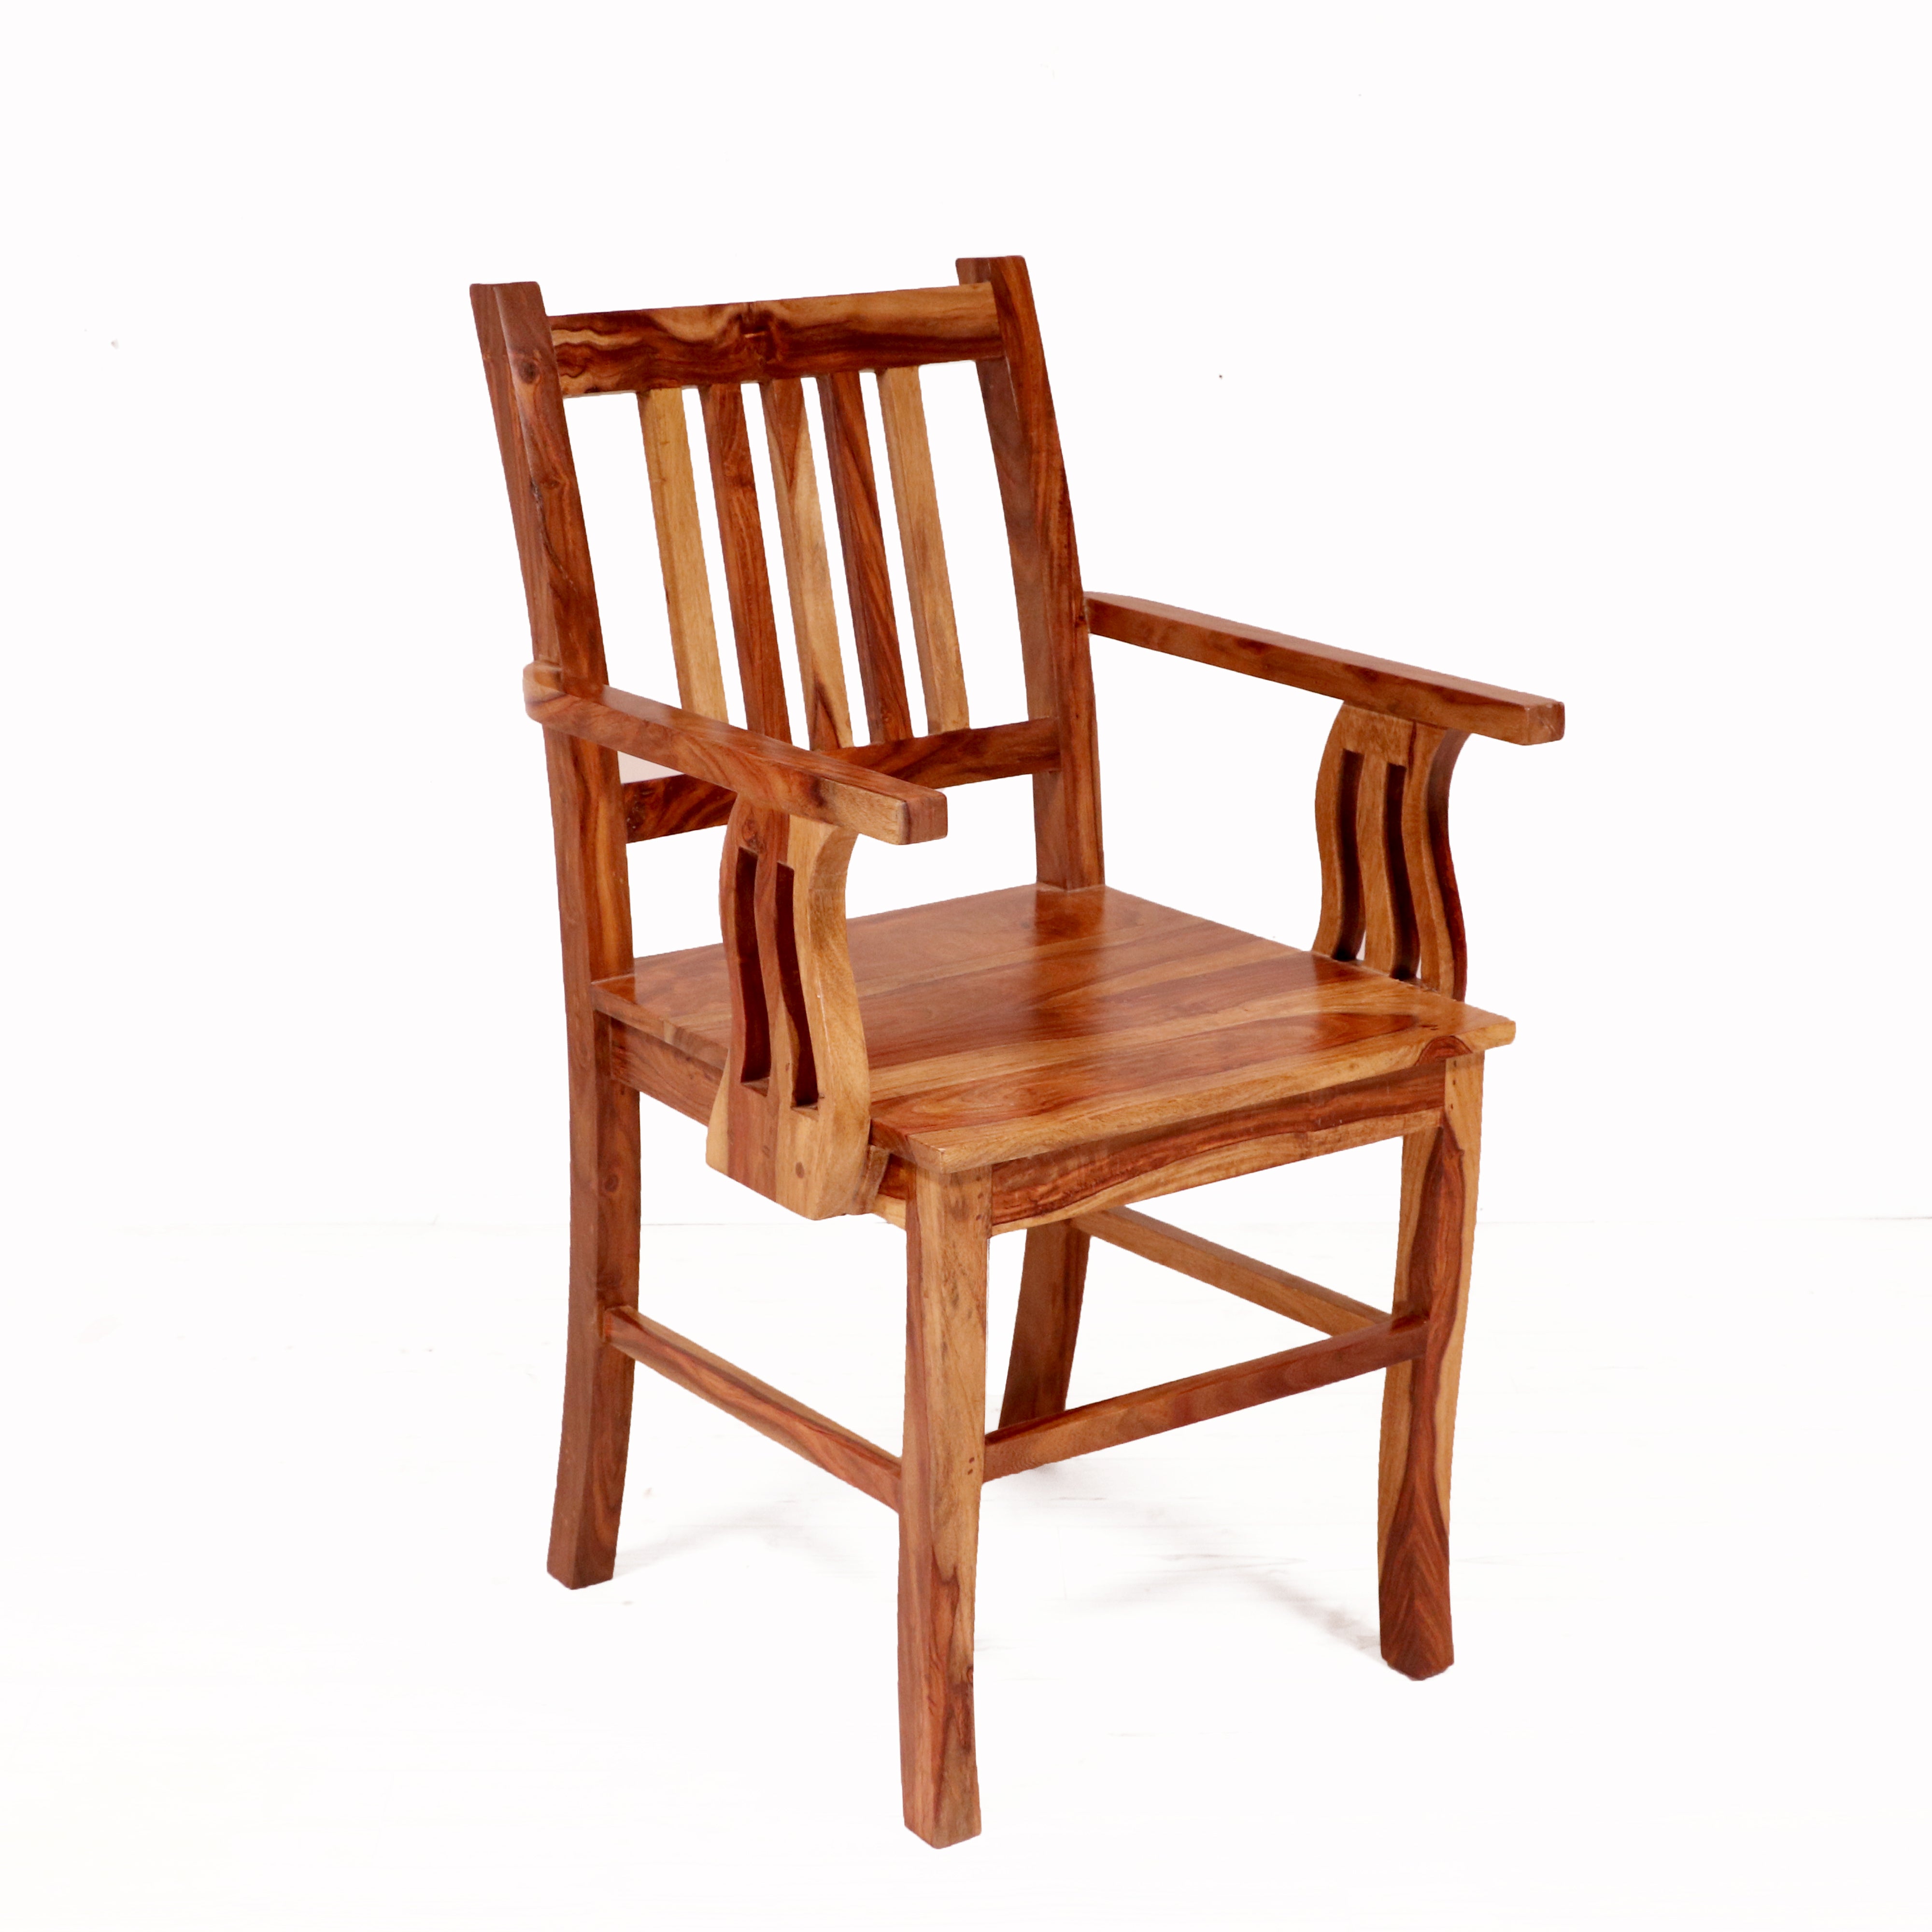 Simple classic sturdy Chair Arm Chair